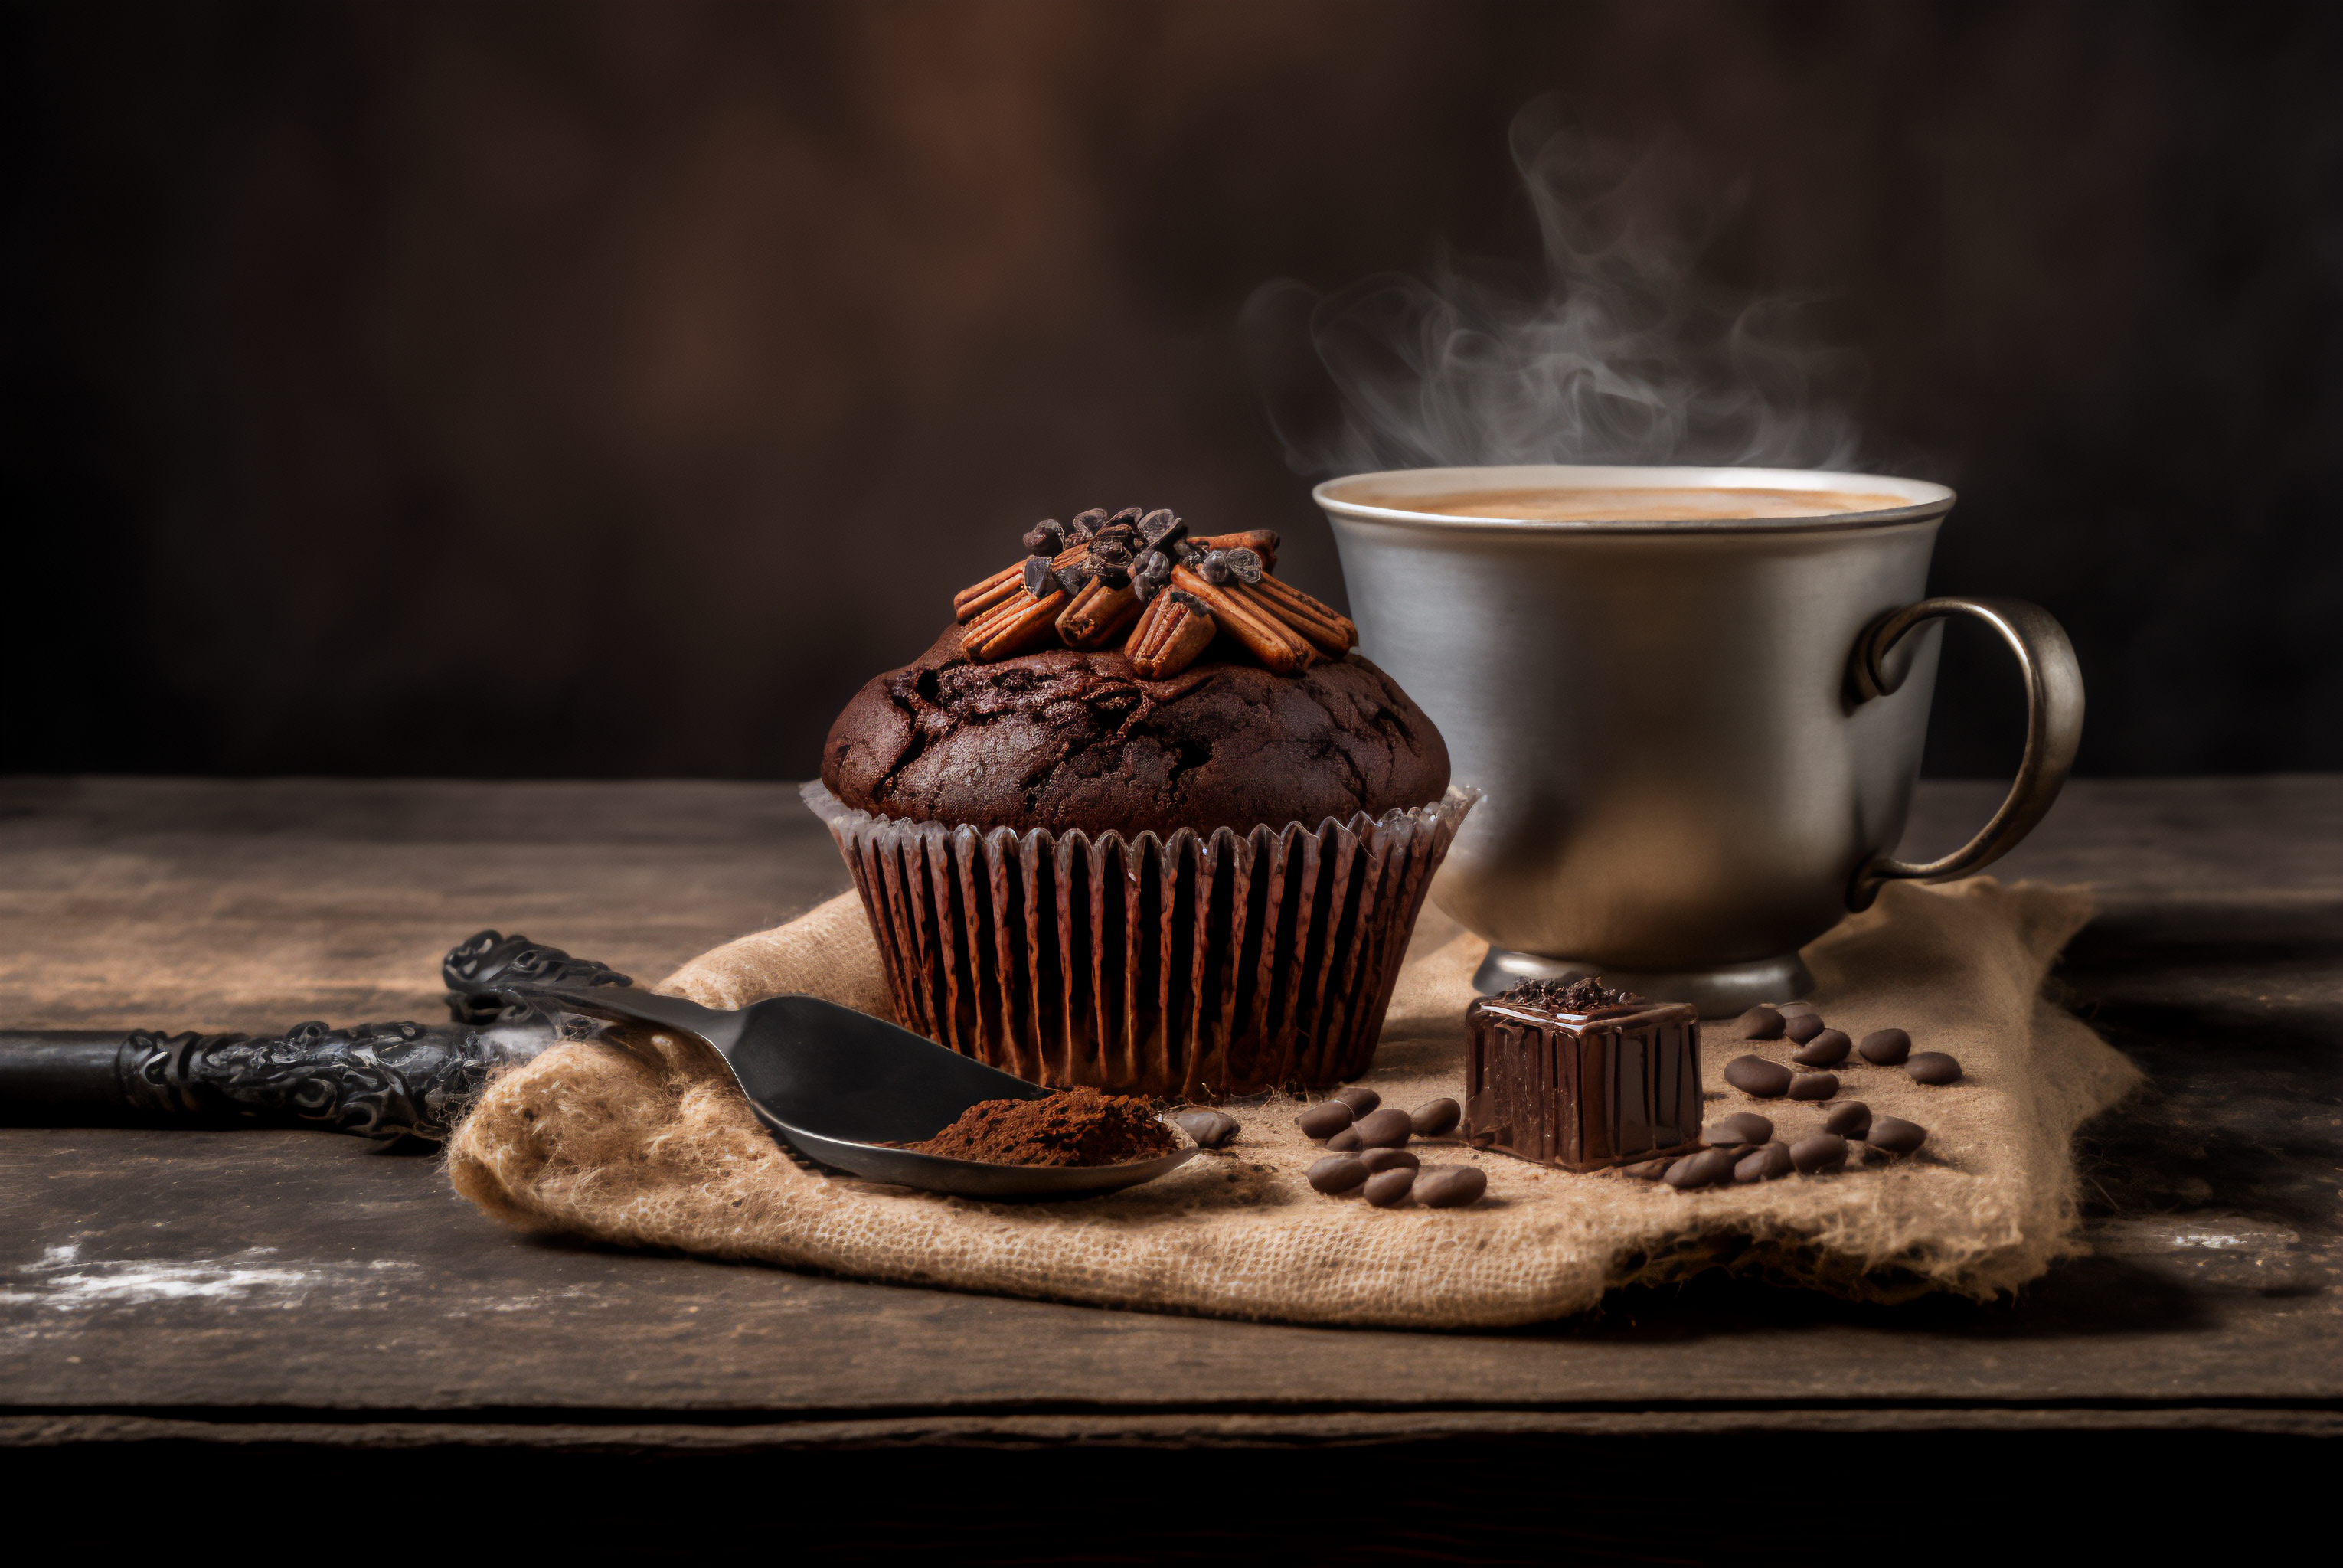 Ai Art Coffee Steam Vapor Chocolate Muffins Coffee Cup Still Life Cupcakes 3060x2048